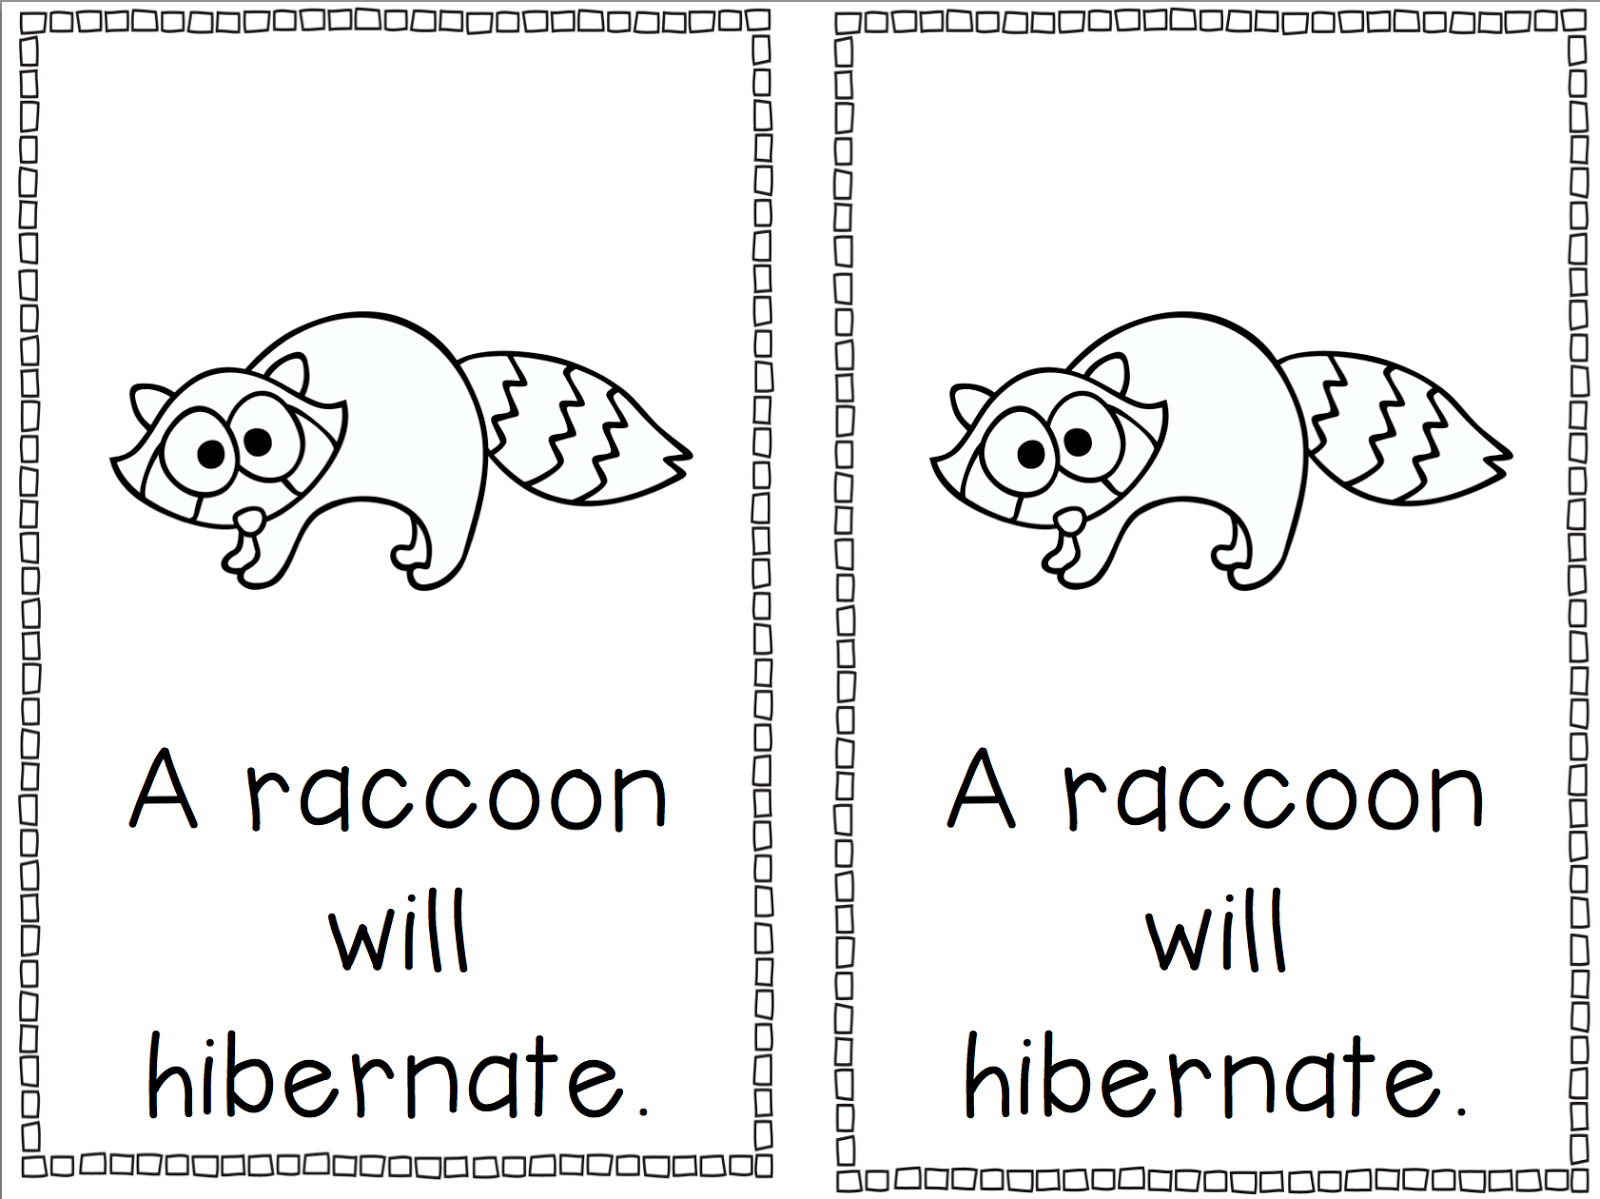 Animals That Hibernate Printable | Search Results | Calendar 2015